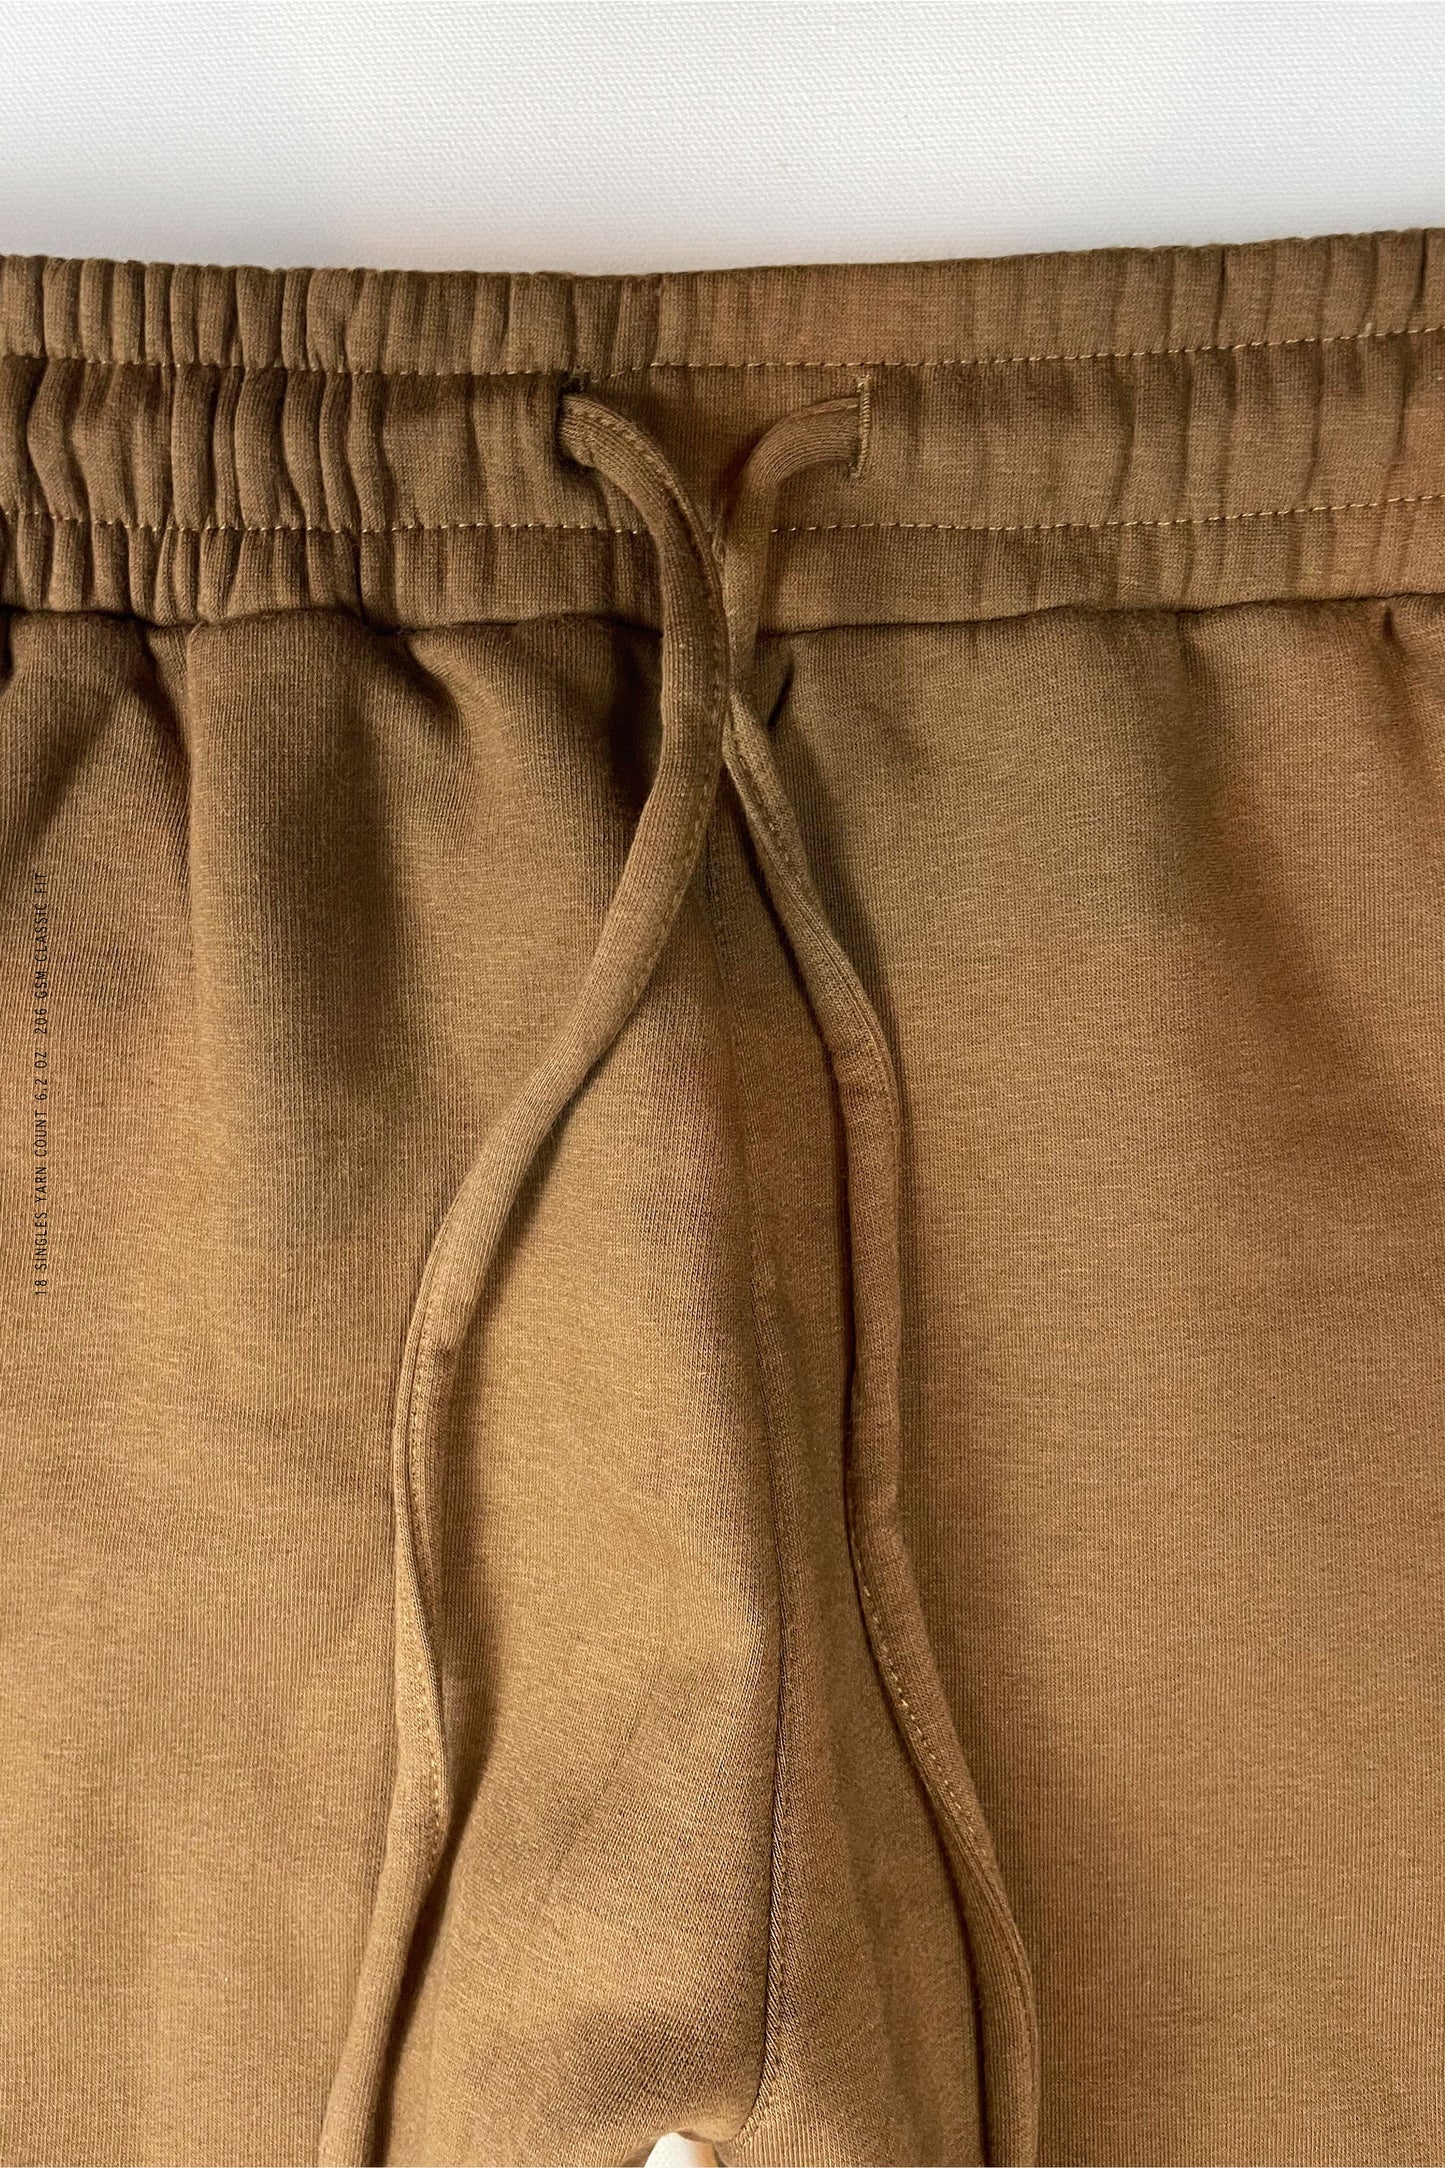 New Blank Sweatpants - Light Brown